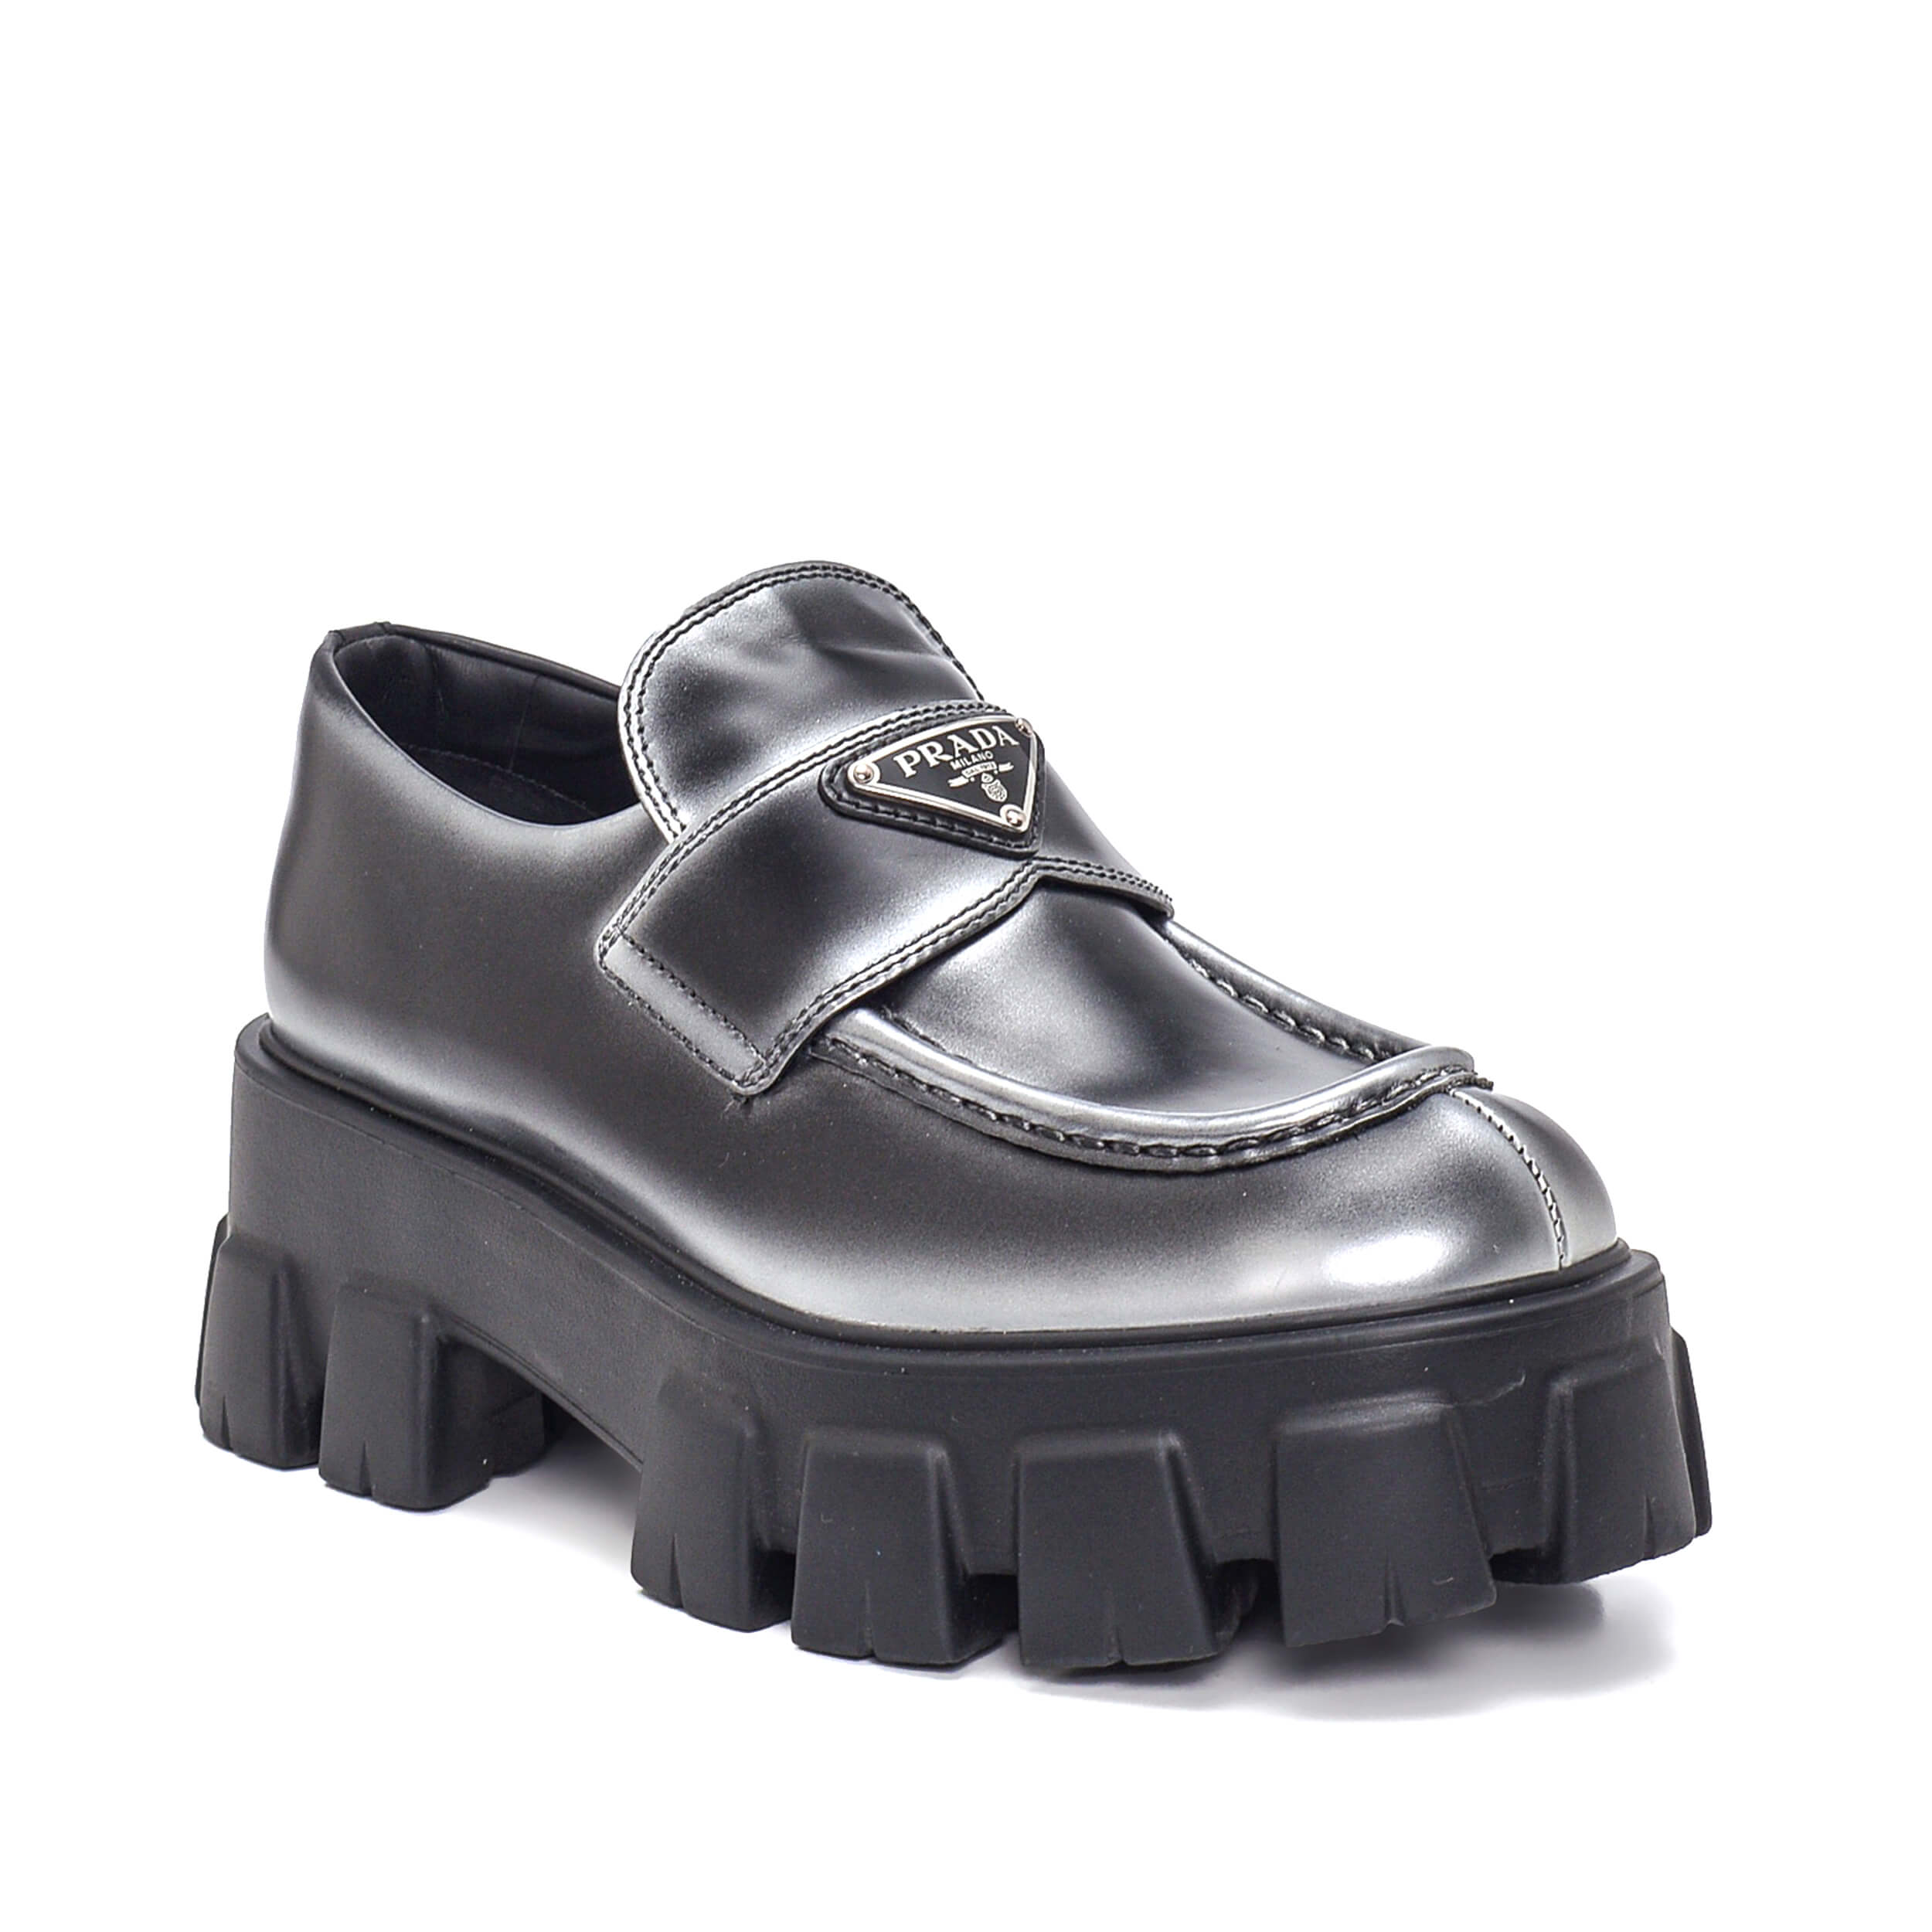 Prada - Black&Silver Leather Loafer